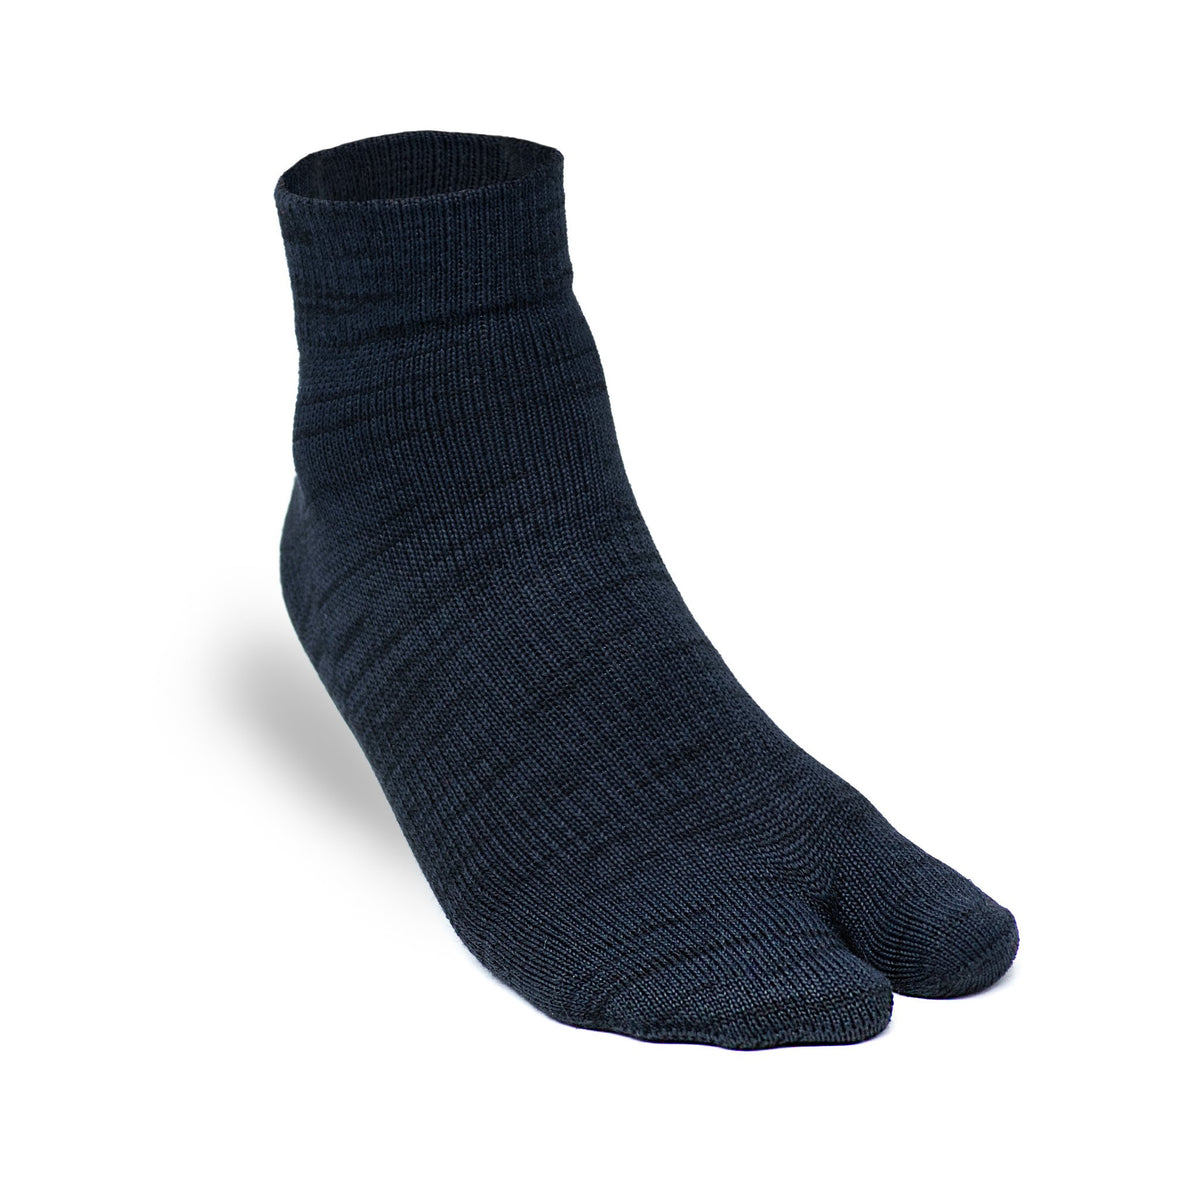 LUNA YUBI Tabi Socks - Merino Wool &amp; Cordura - Ankle Length - LUNA Sandals